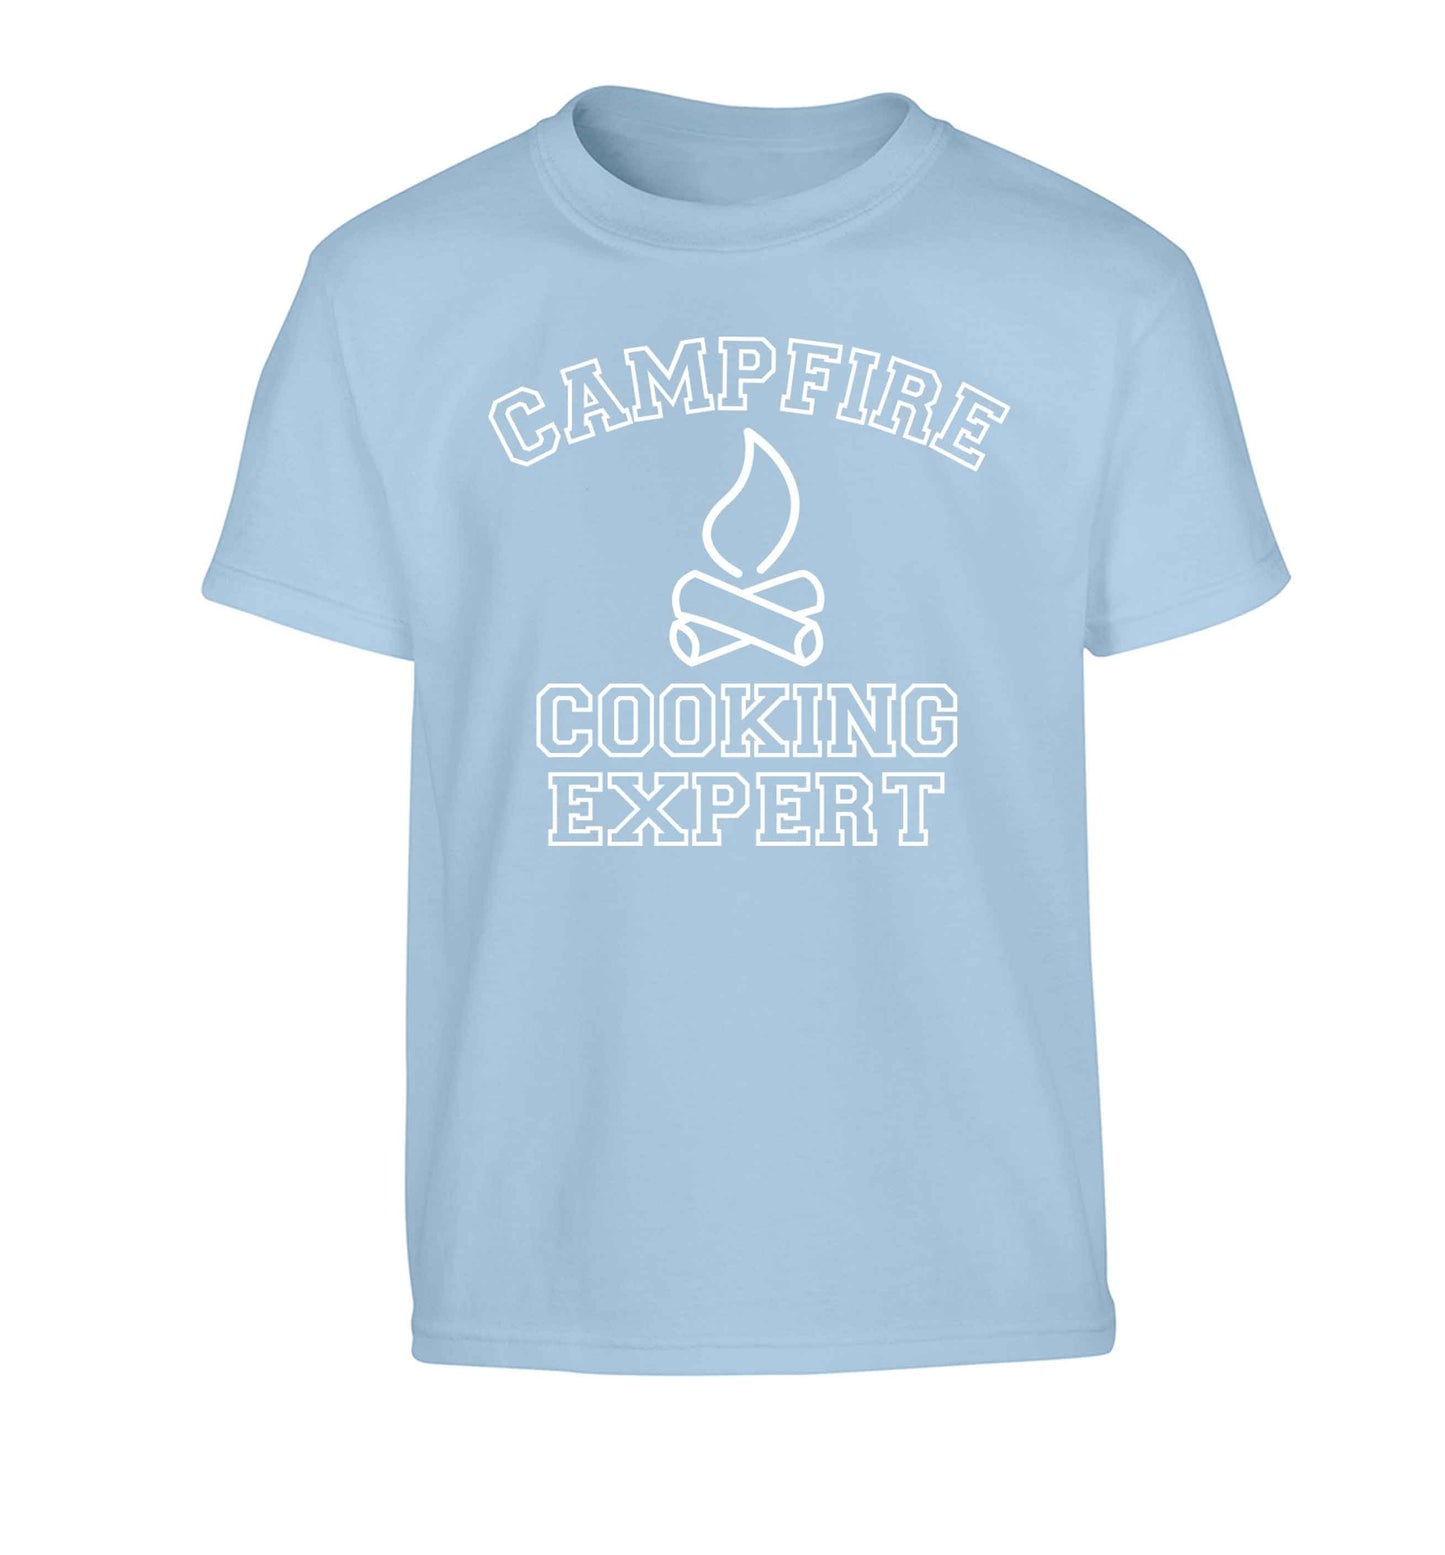 Campfire cooking expert Children's light blue Tshirt 12-13 Years